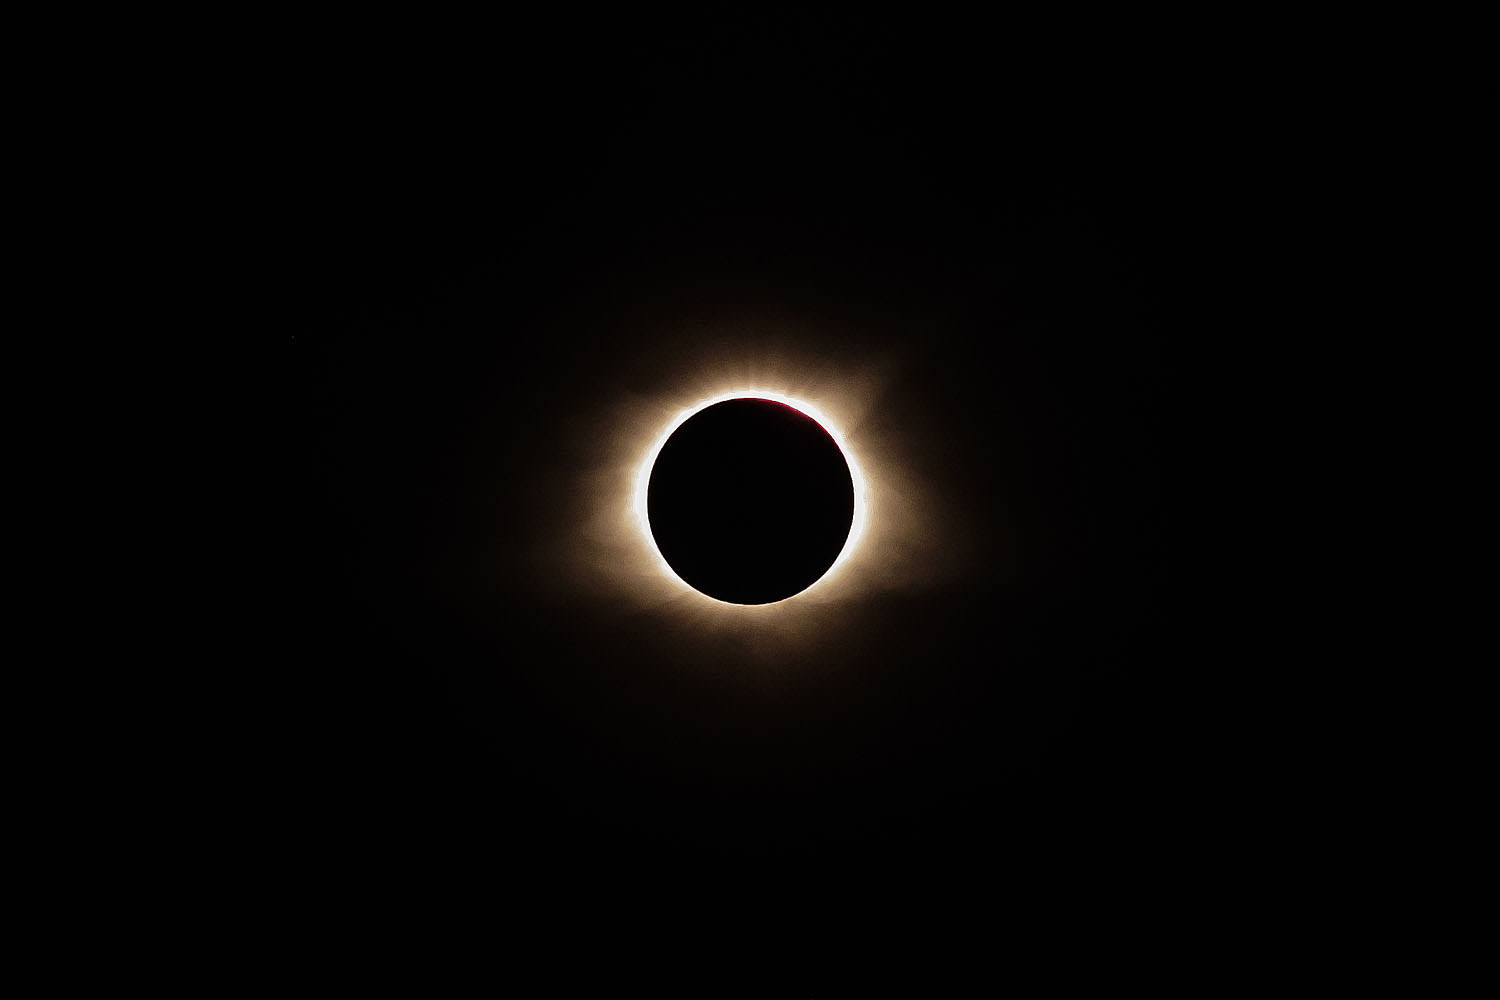 Total solar eclipse 2017